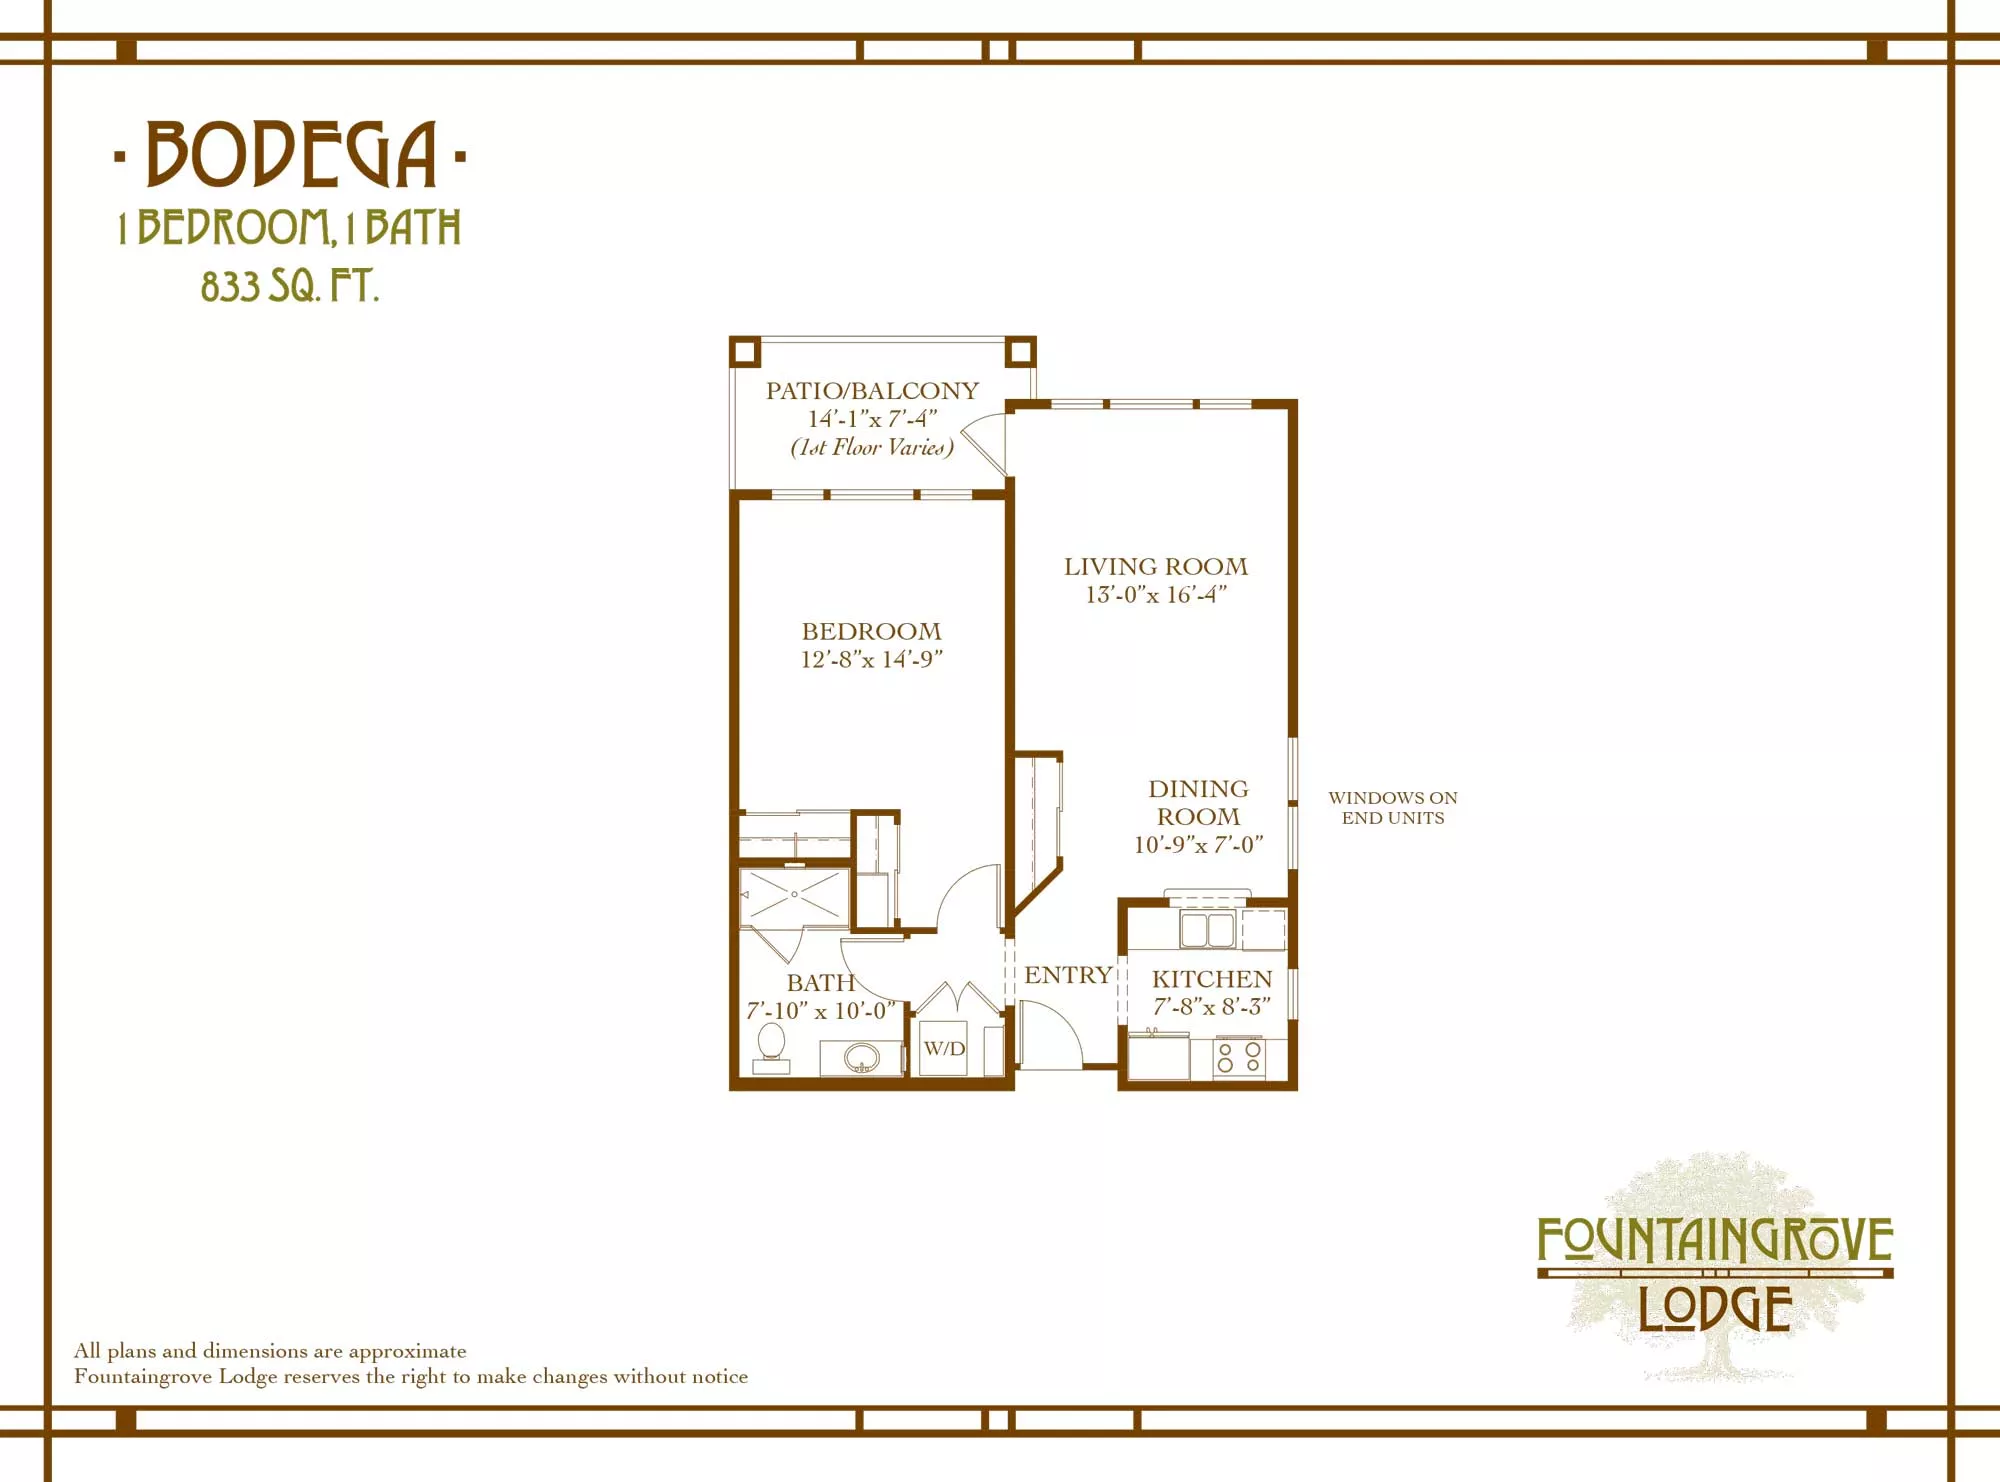 Bodega one bedroom floor plan